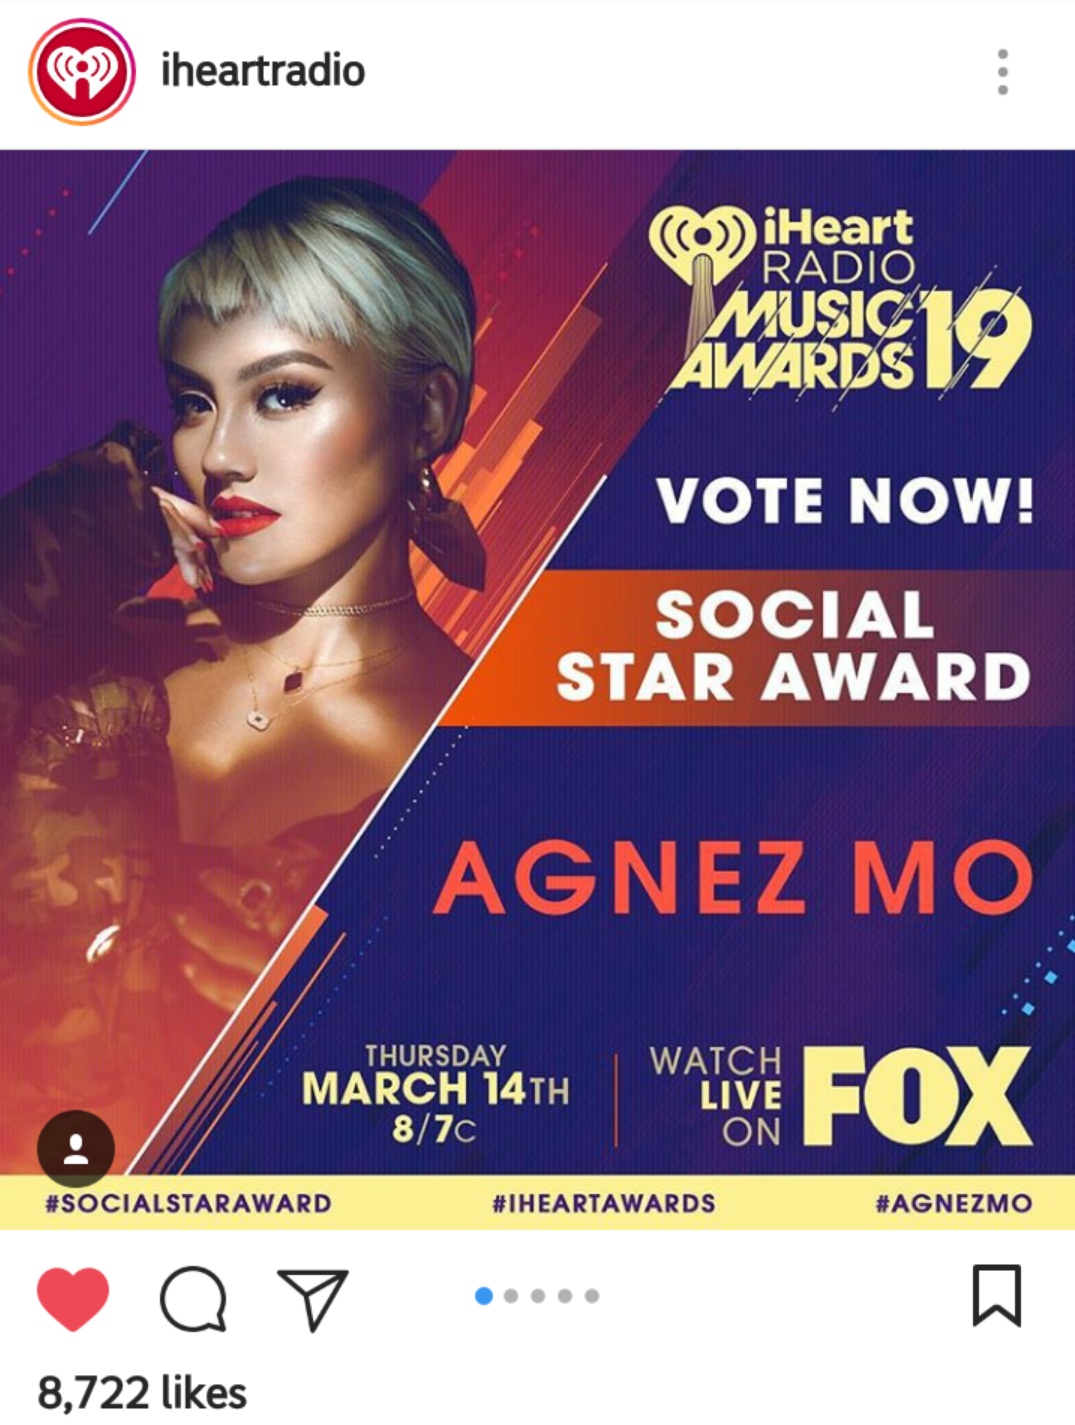 Agnez Mo masuk nominasi penghargaan iHeartRadio Music Awards 2019